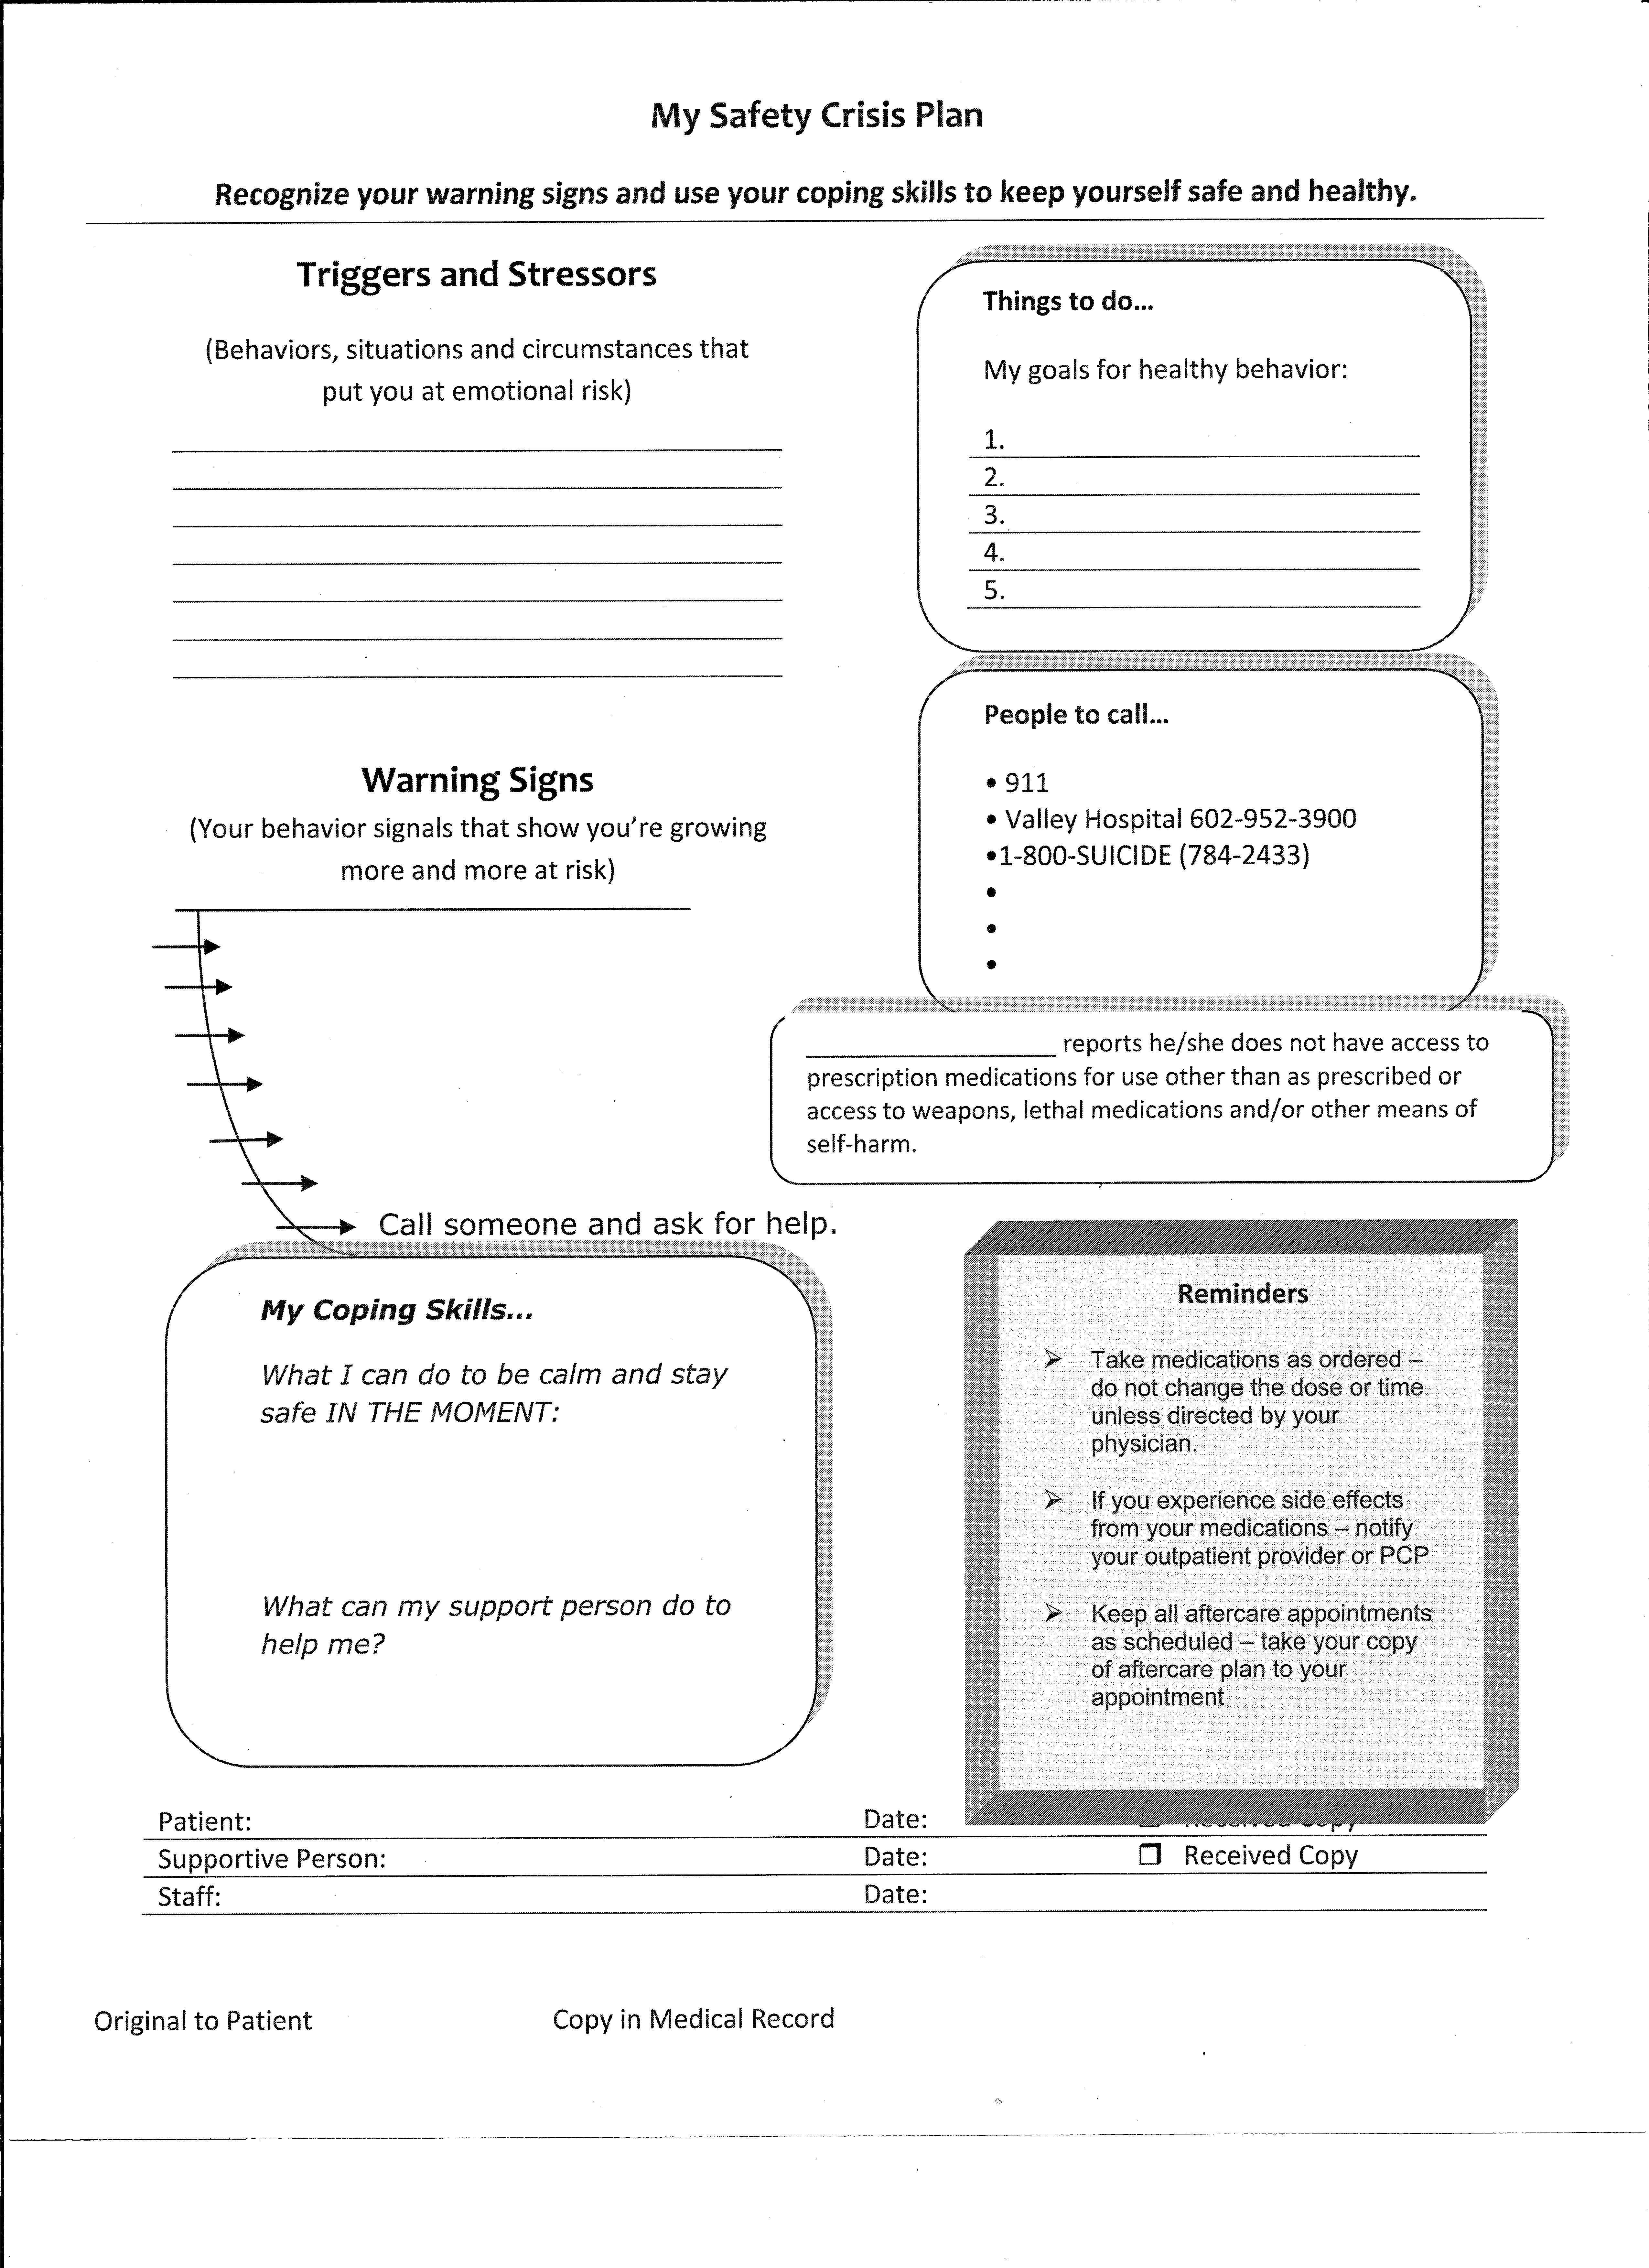 My Family Tree Worksheet Printable As Function Notation Worksheet As Well As Family Therapy Worksheets Pdf